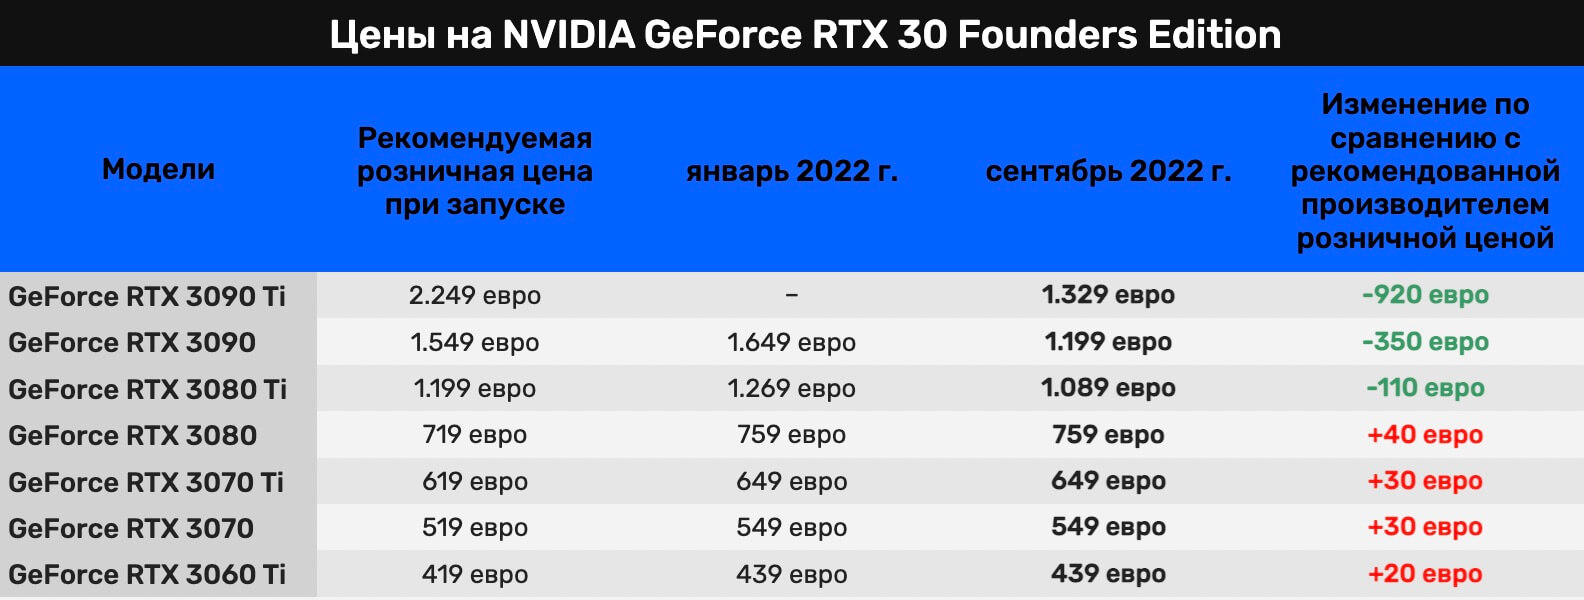 NVIDIA GeForce RTX 30 Founders Edition цены